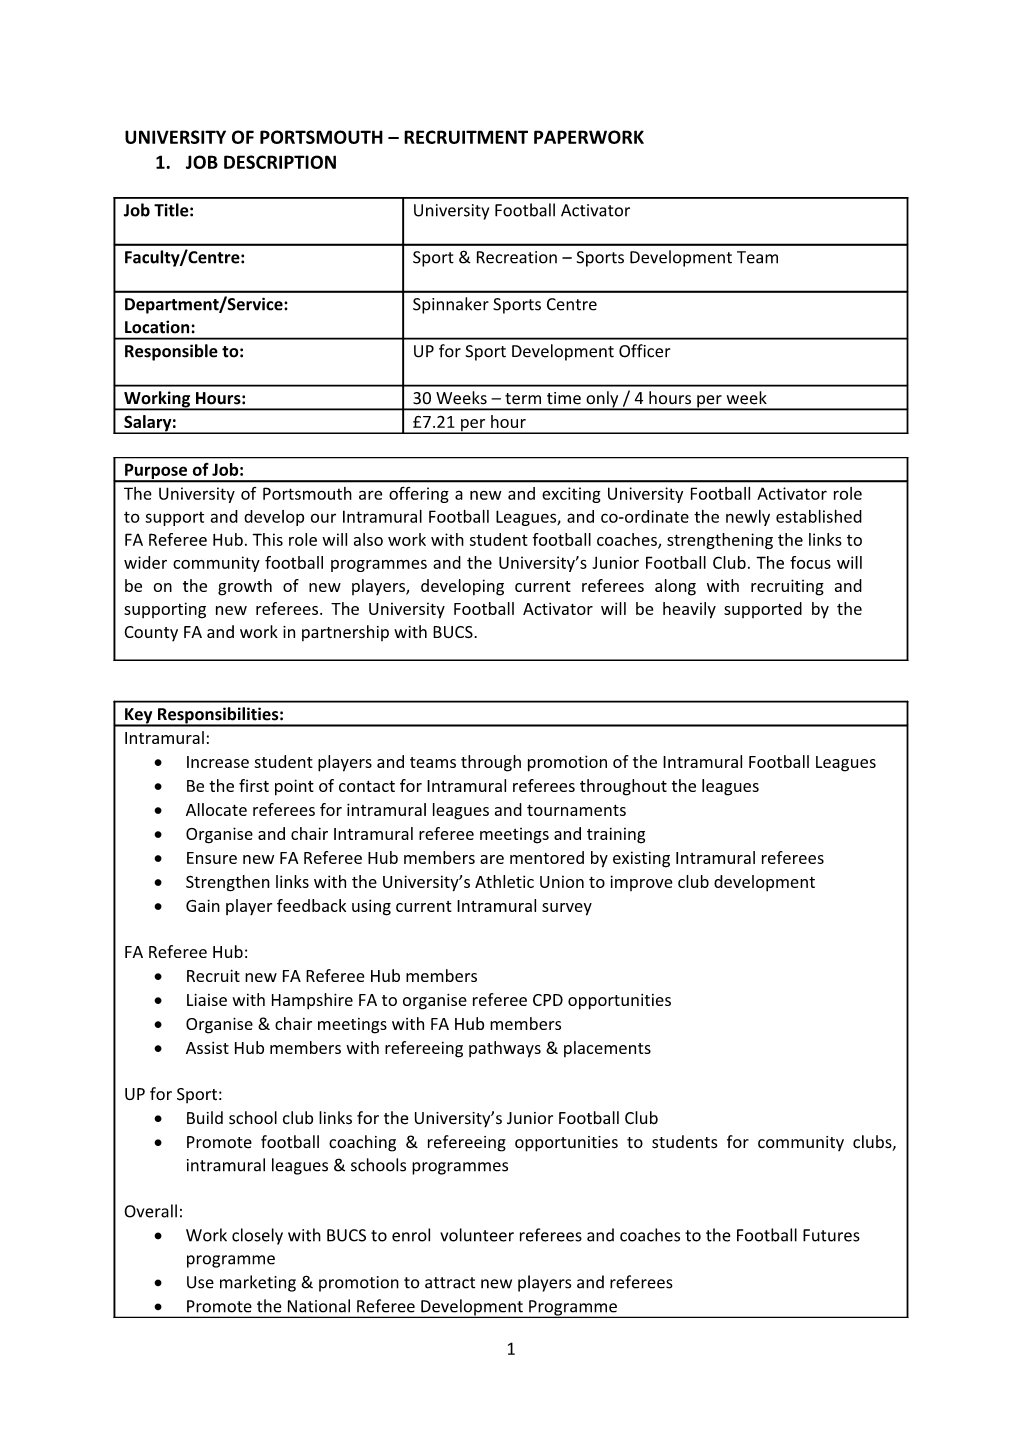 University of Portsmouth Recruitment Paperwork